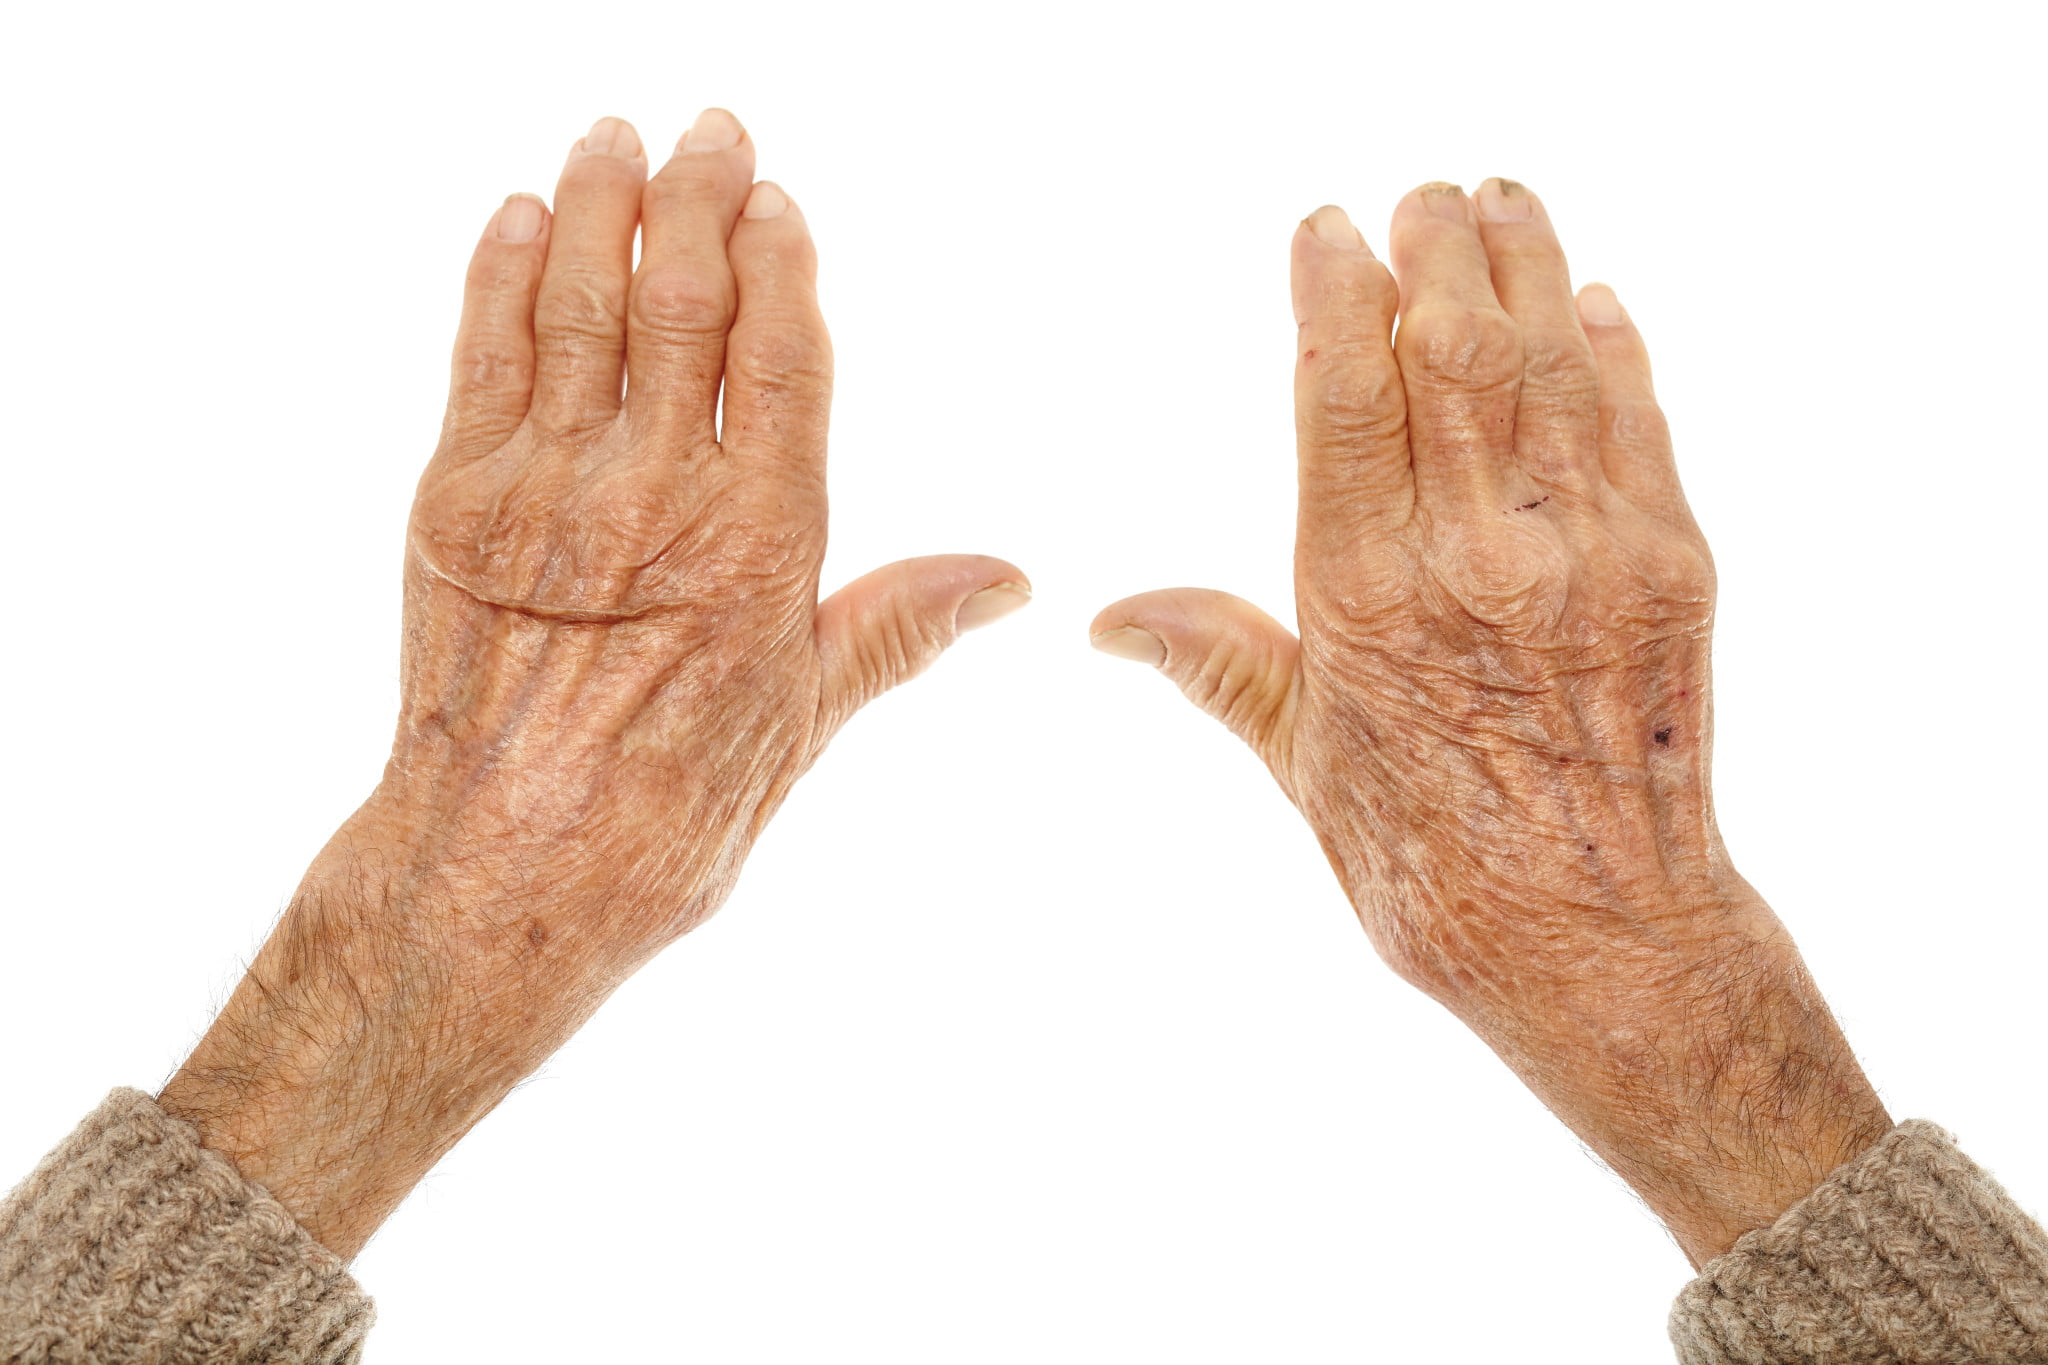 hands with arthritis